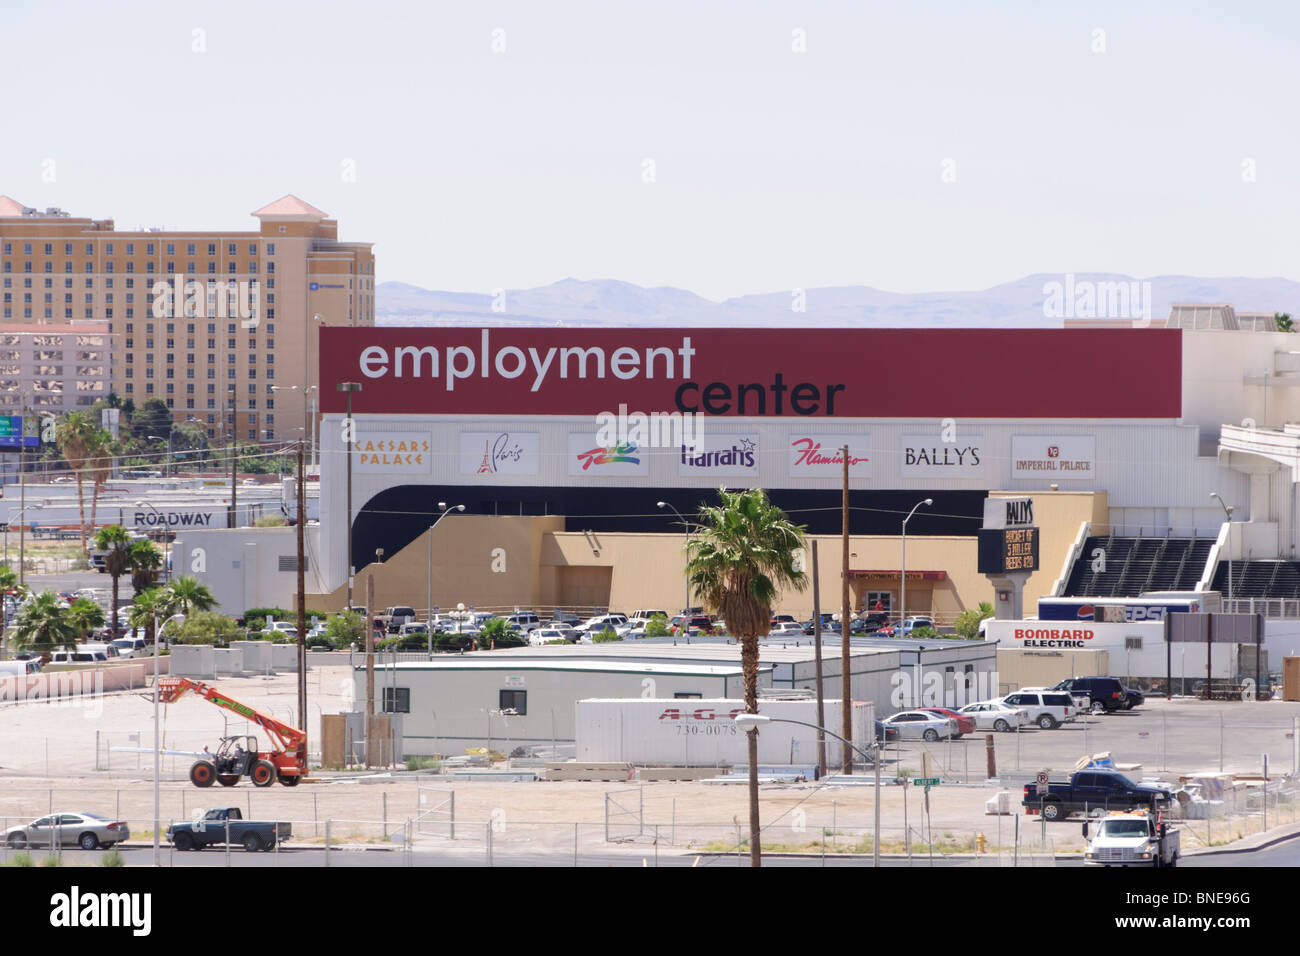 The Las Vegas Employment Center Stock Photo, Royalty Free Image: 30432712 - Alamy